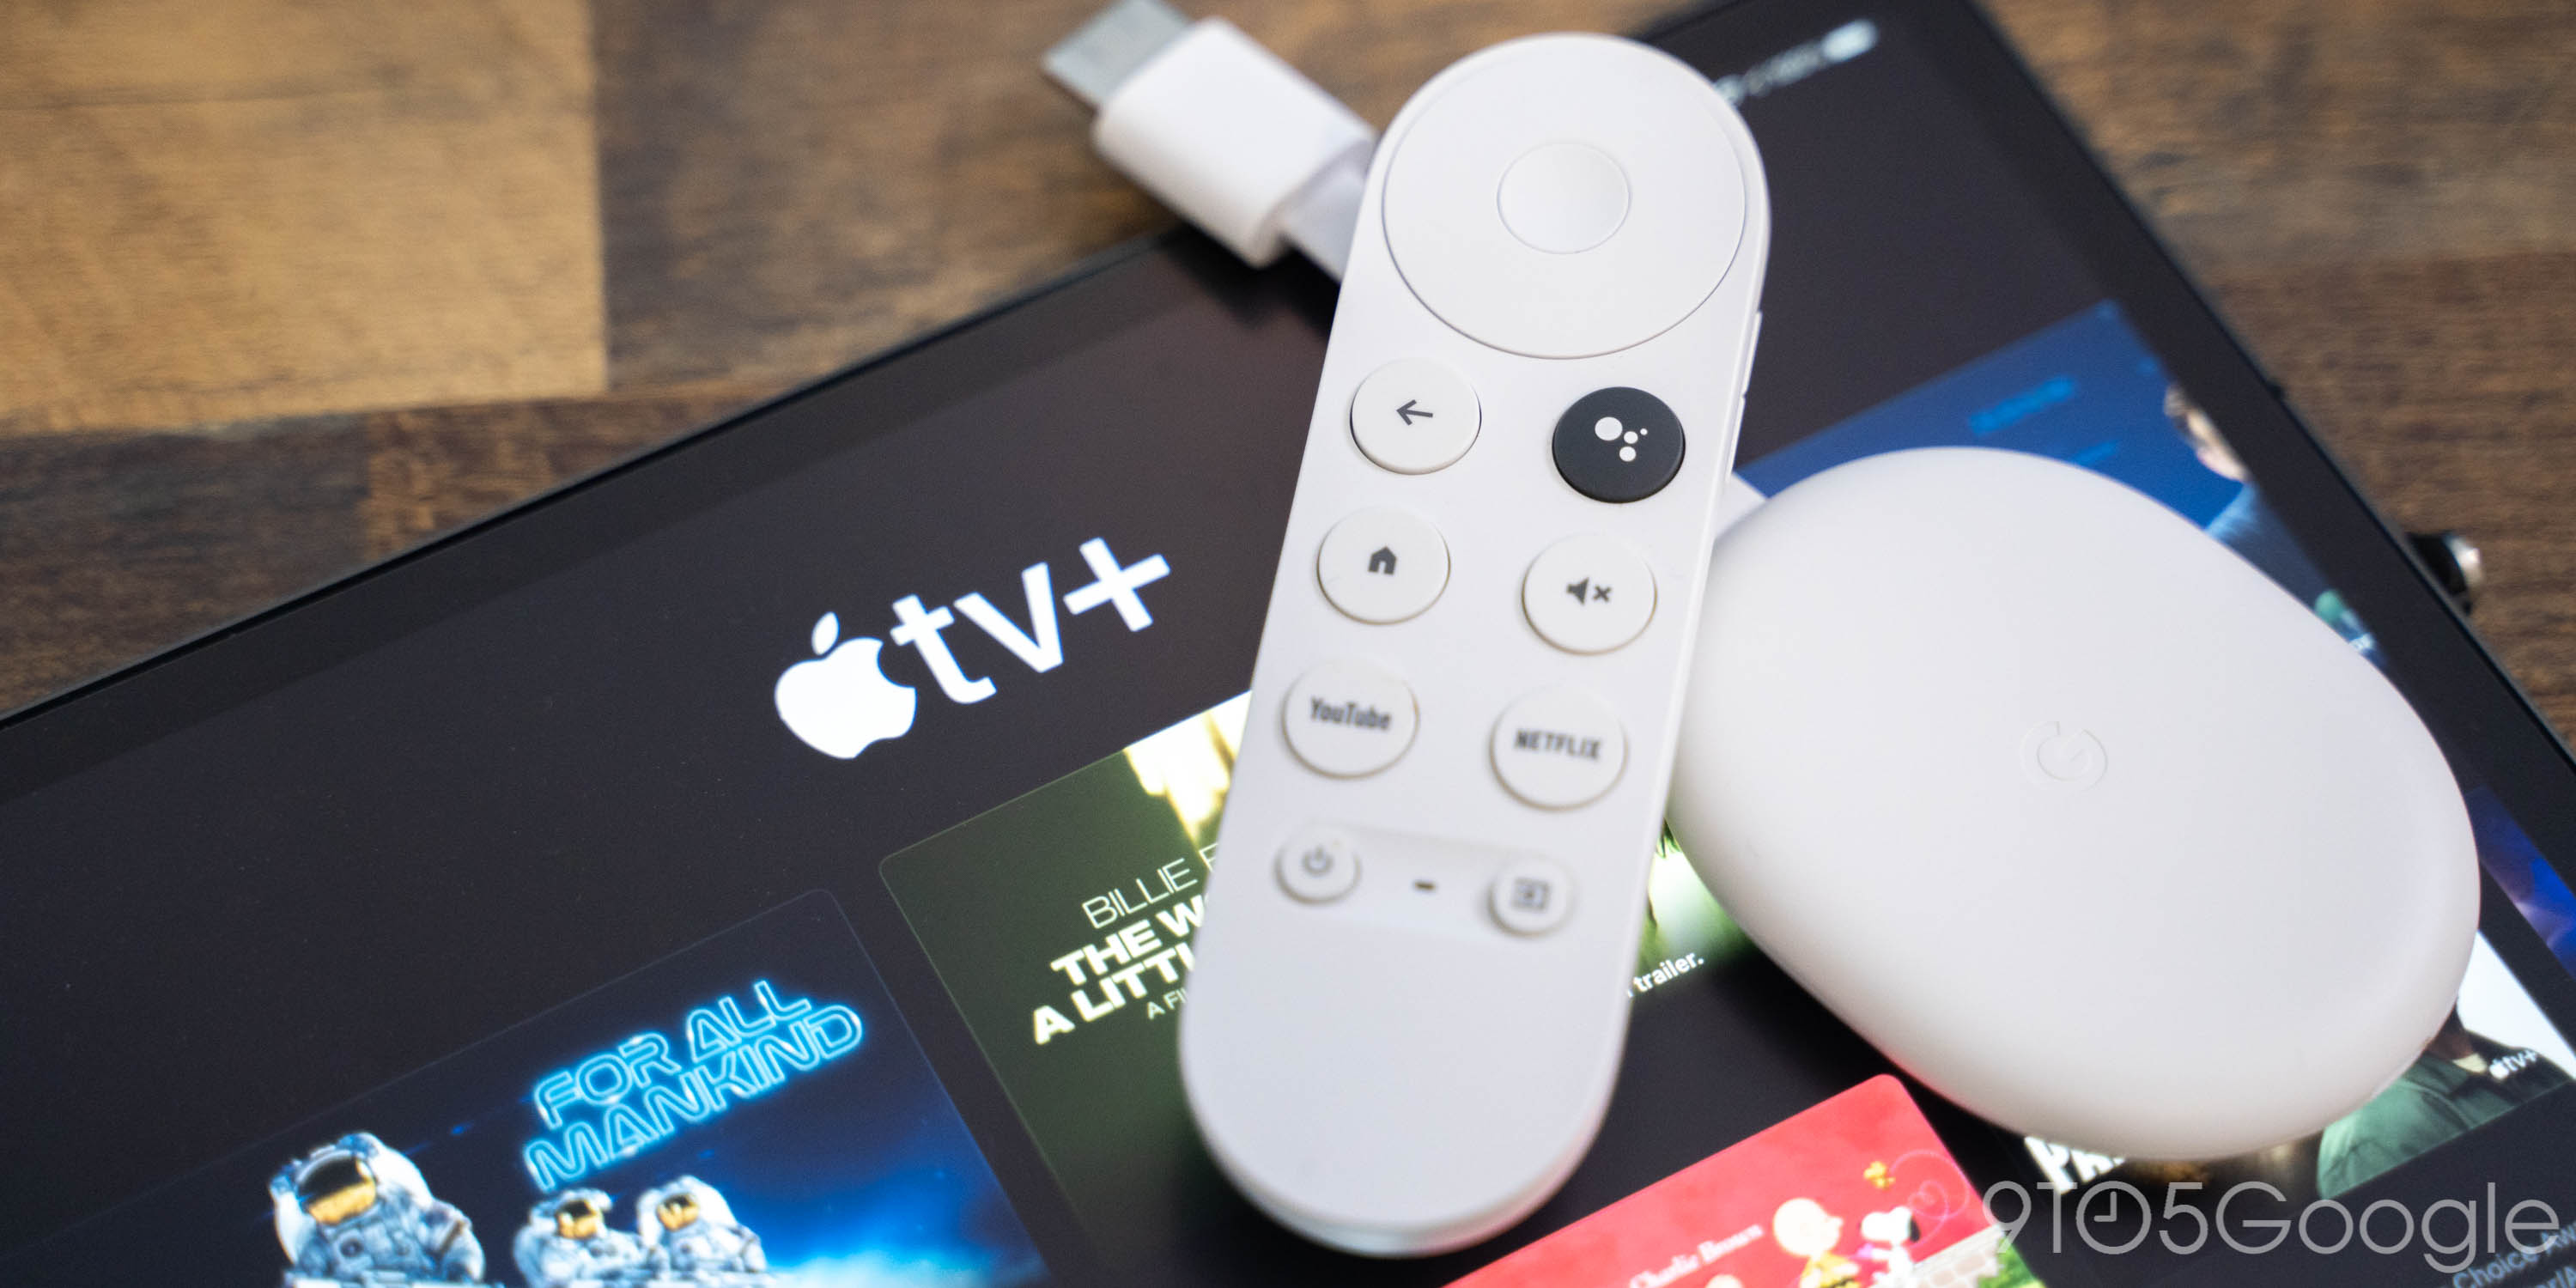 Apple TV gets Assistant on Chromecast - 9to5Google